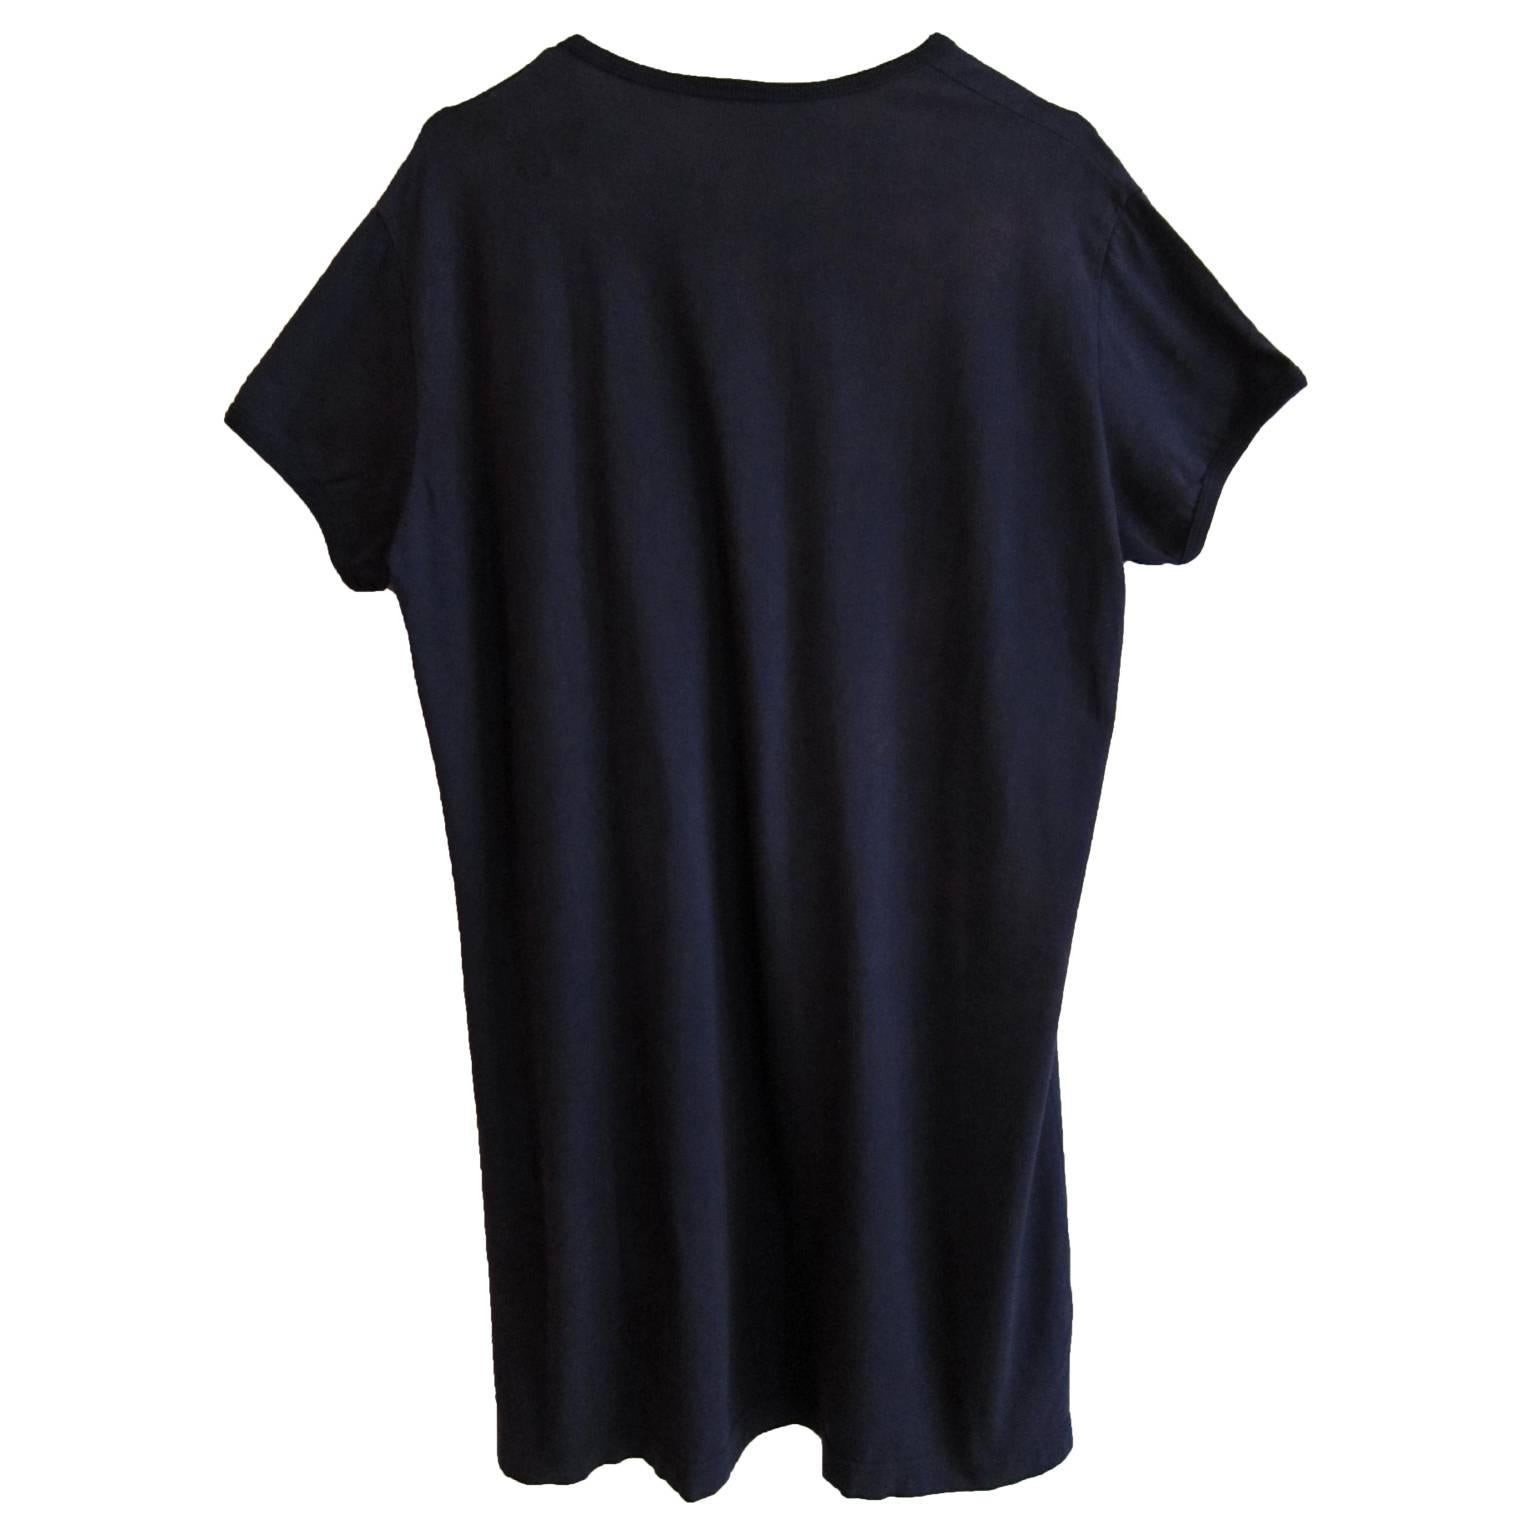 Rare Vivienne Westwood ejaculating penises navy jersey t shirt from circa 1994.
Size : L
Shoulder : 45 cm
Length : 75 cm
Under arm : 54 cm

